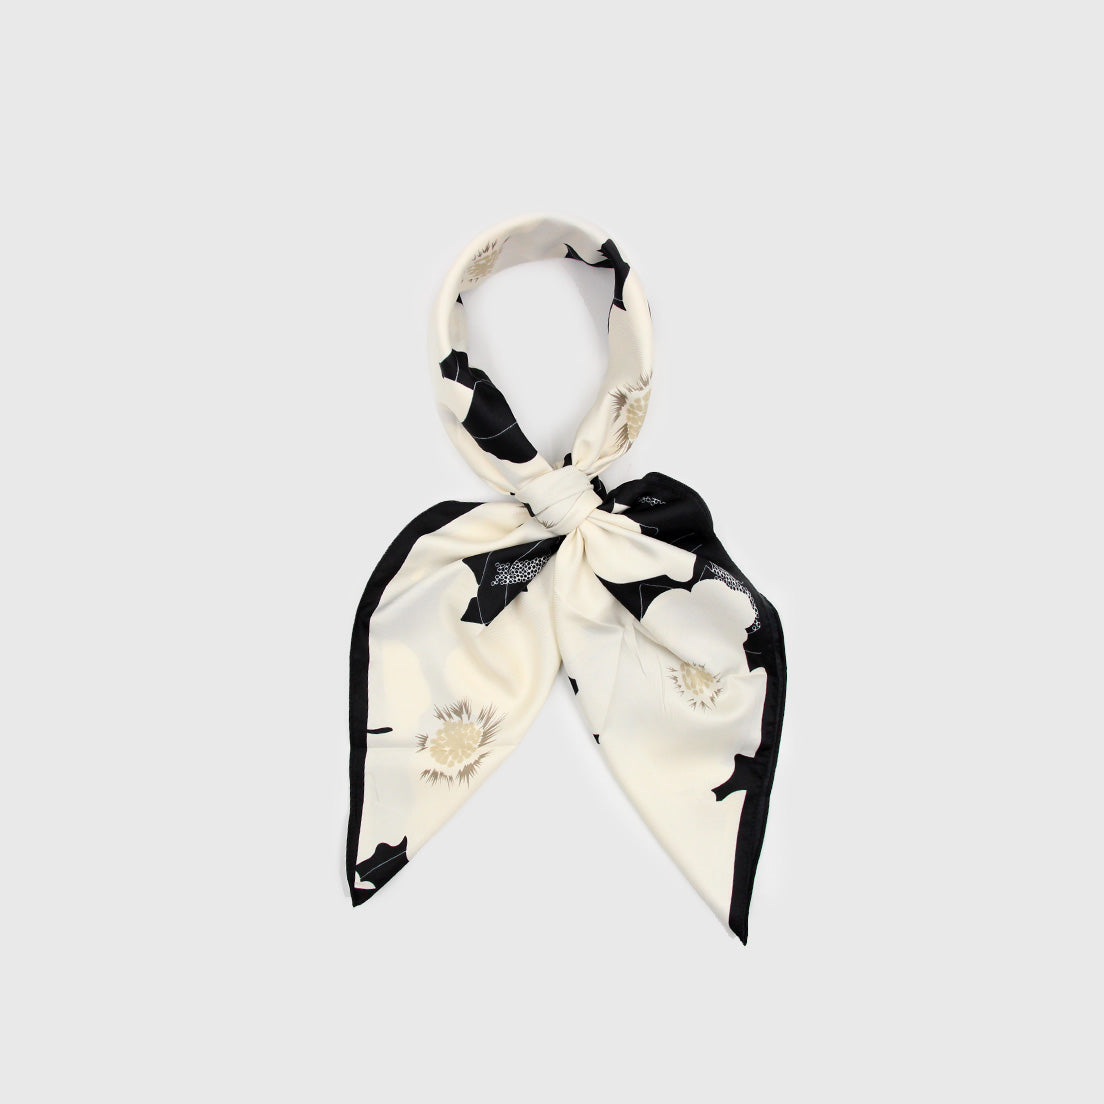 Pañuelo grande floral blanco con negro